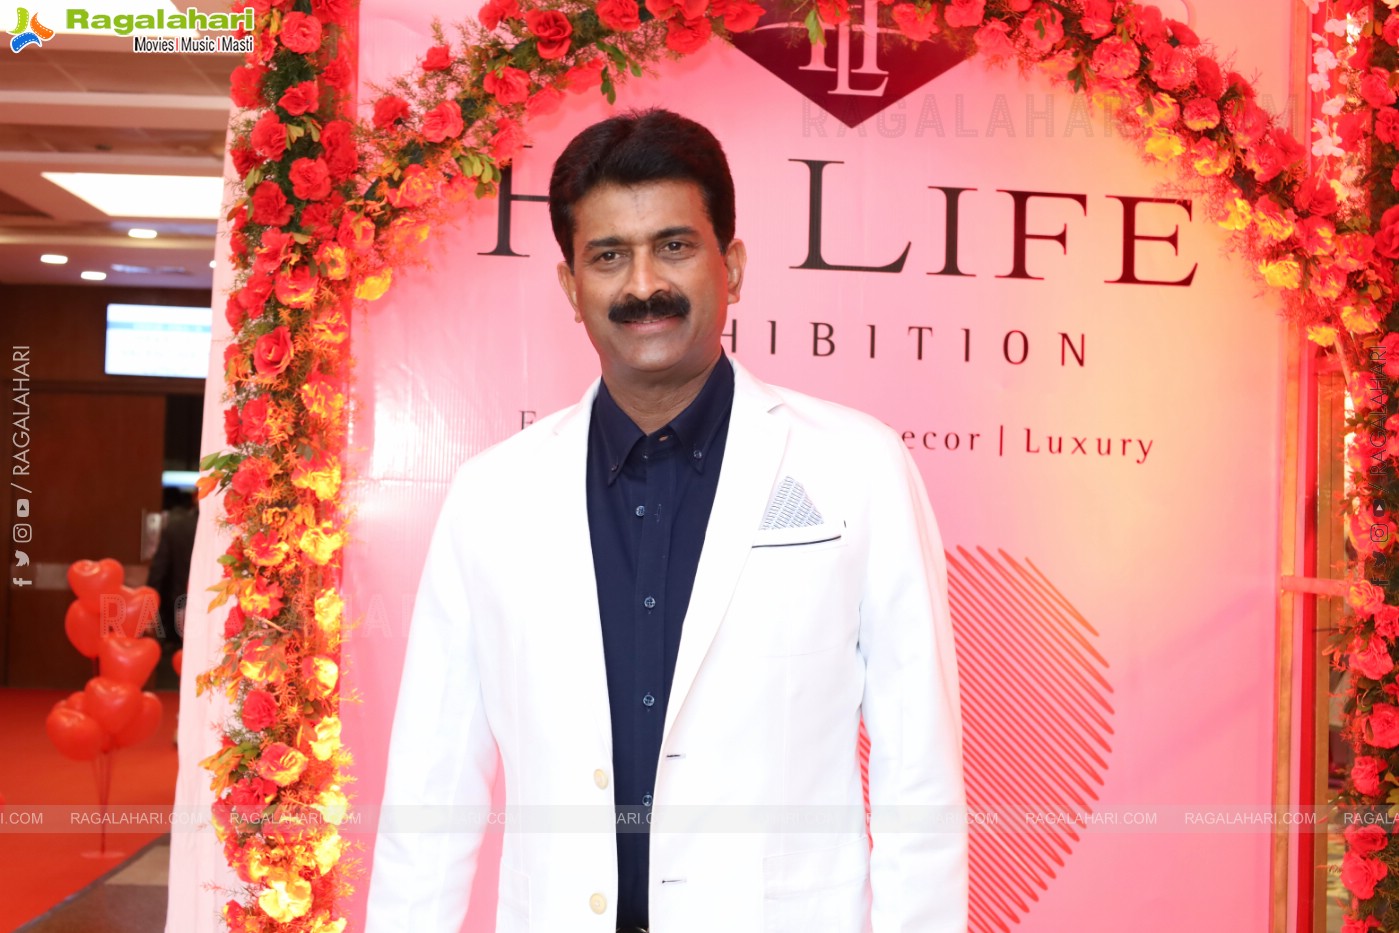 Grand Launch of Hi Life Exhibition at HICC - Novotel, Hyderabad